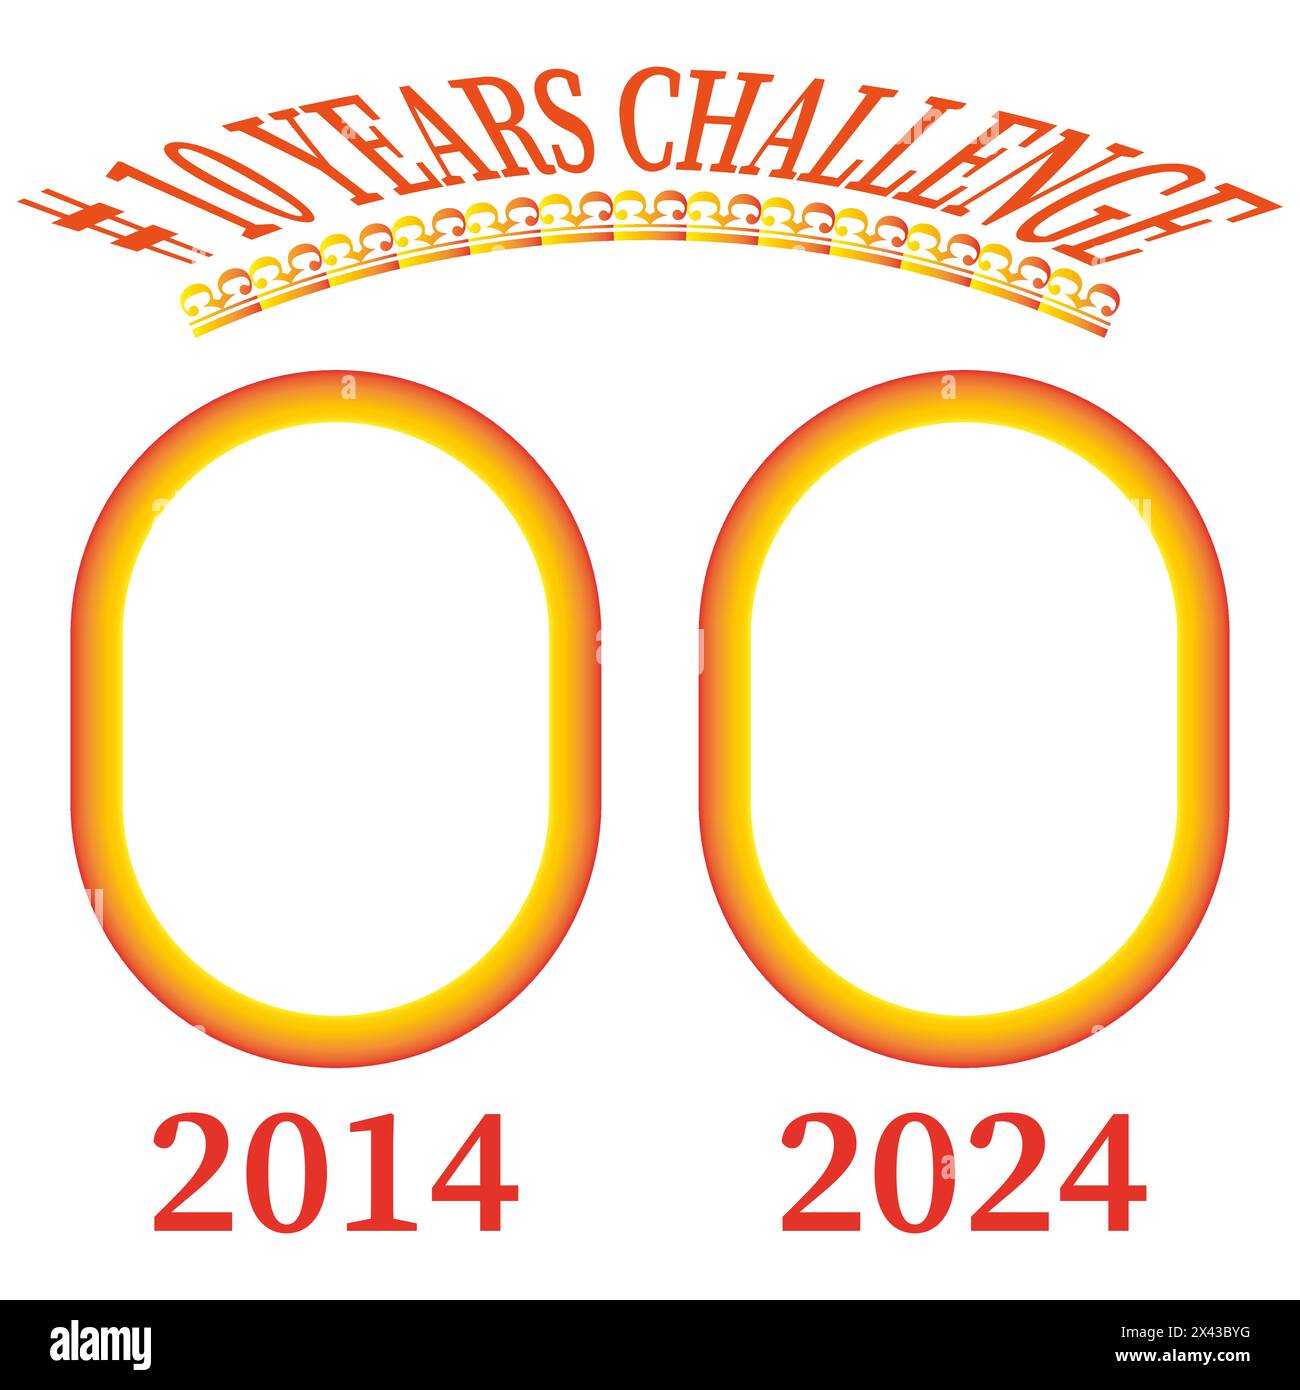 10 Years Challenge vibrant frames. Timeline comparison 2014 versus 2024. Vector anniversary borders. Stock Vector